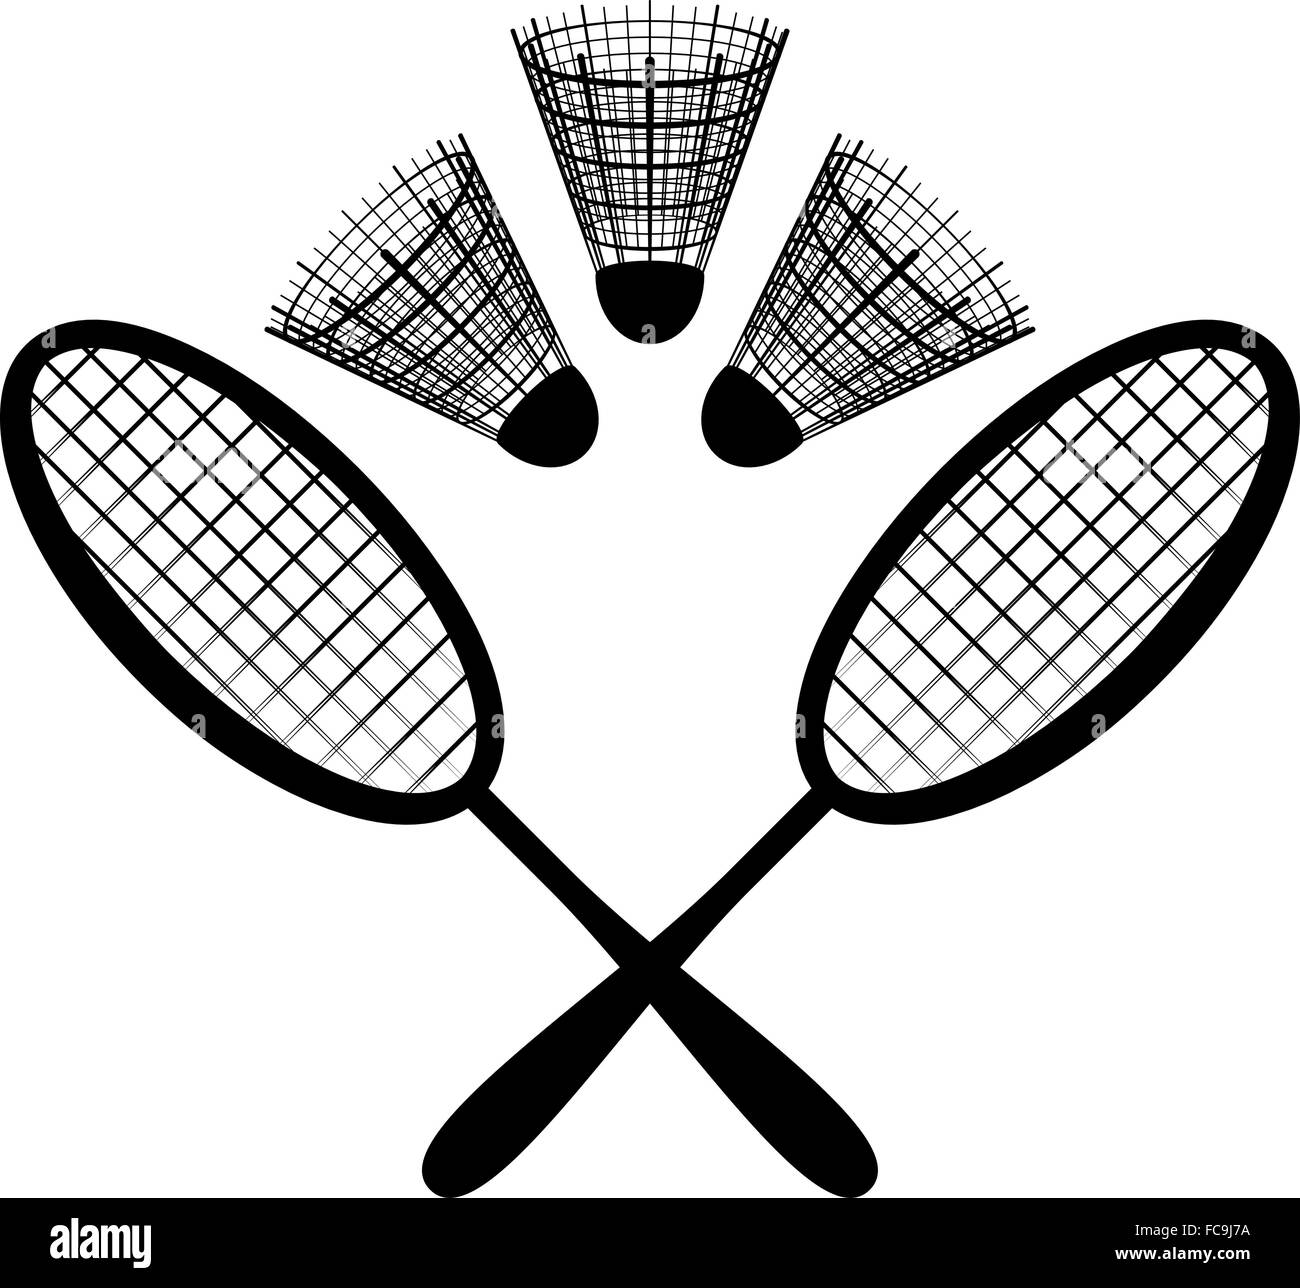 Equipment for the badminton, silhouette Stock Vector